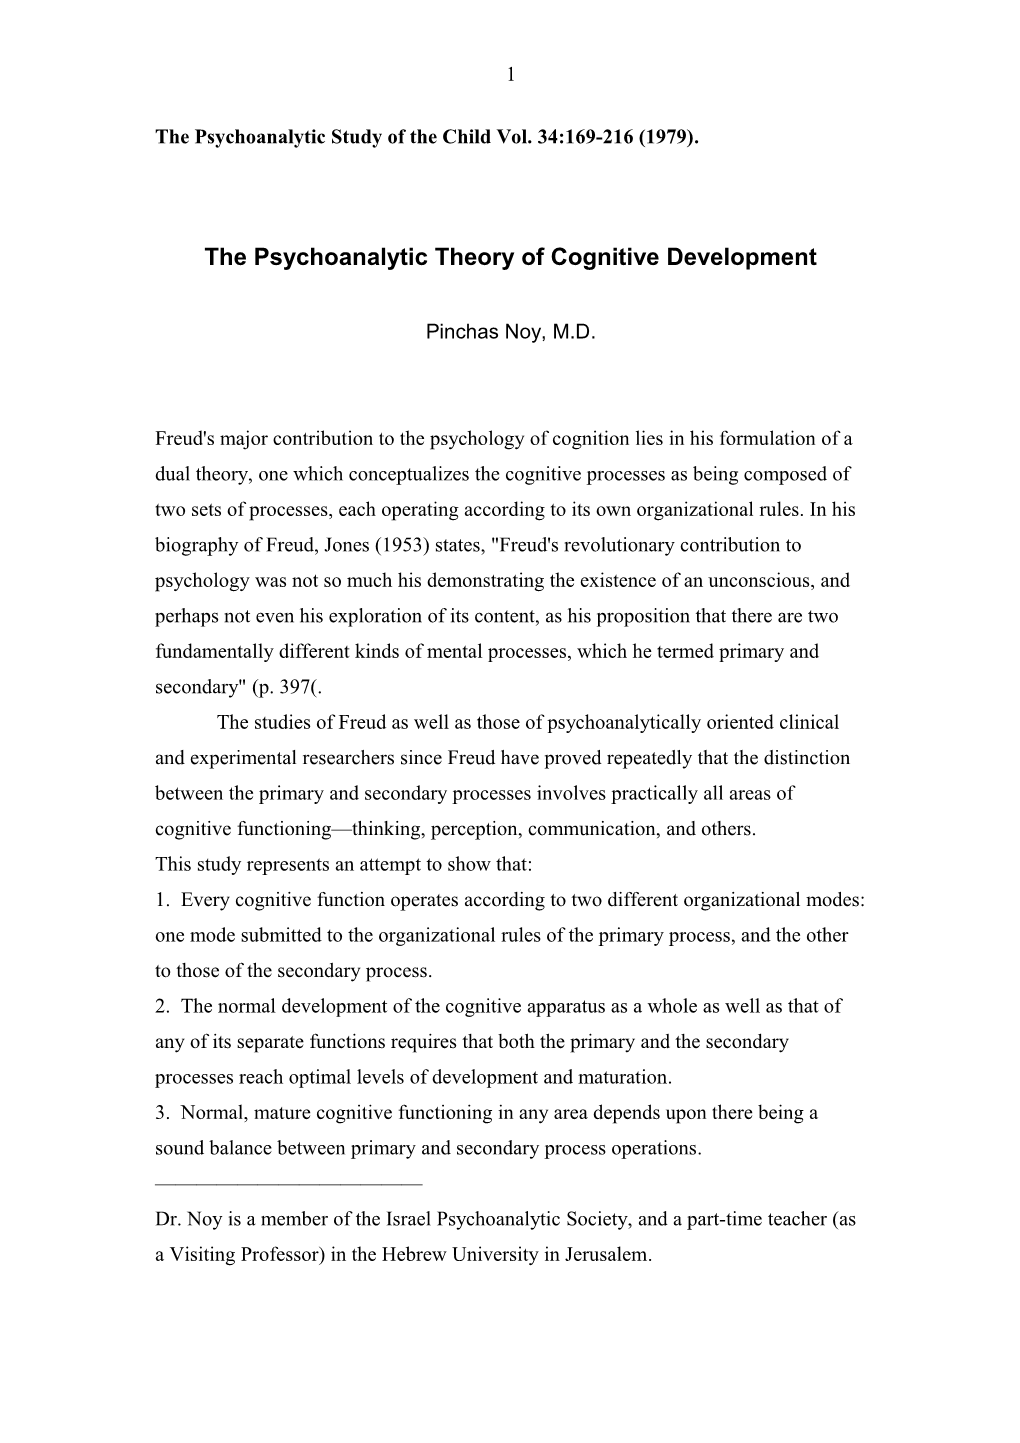 The Psychoanalytic Study of the Child Vol. 34:169-216 (1979)